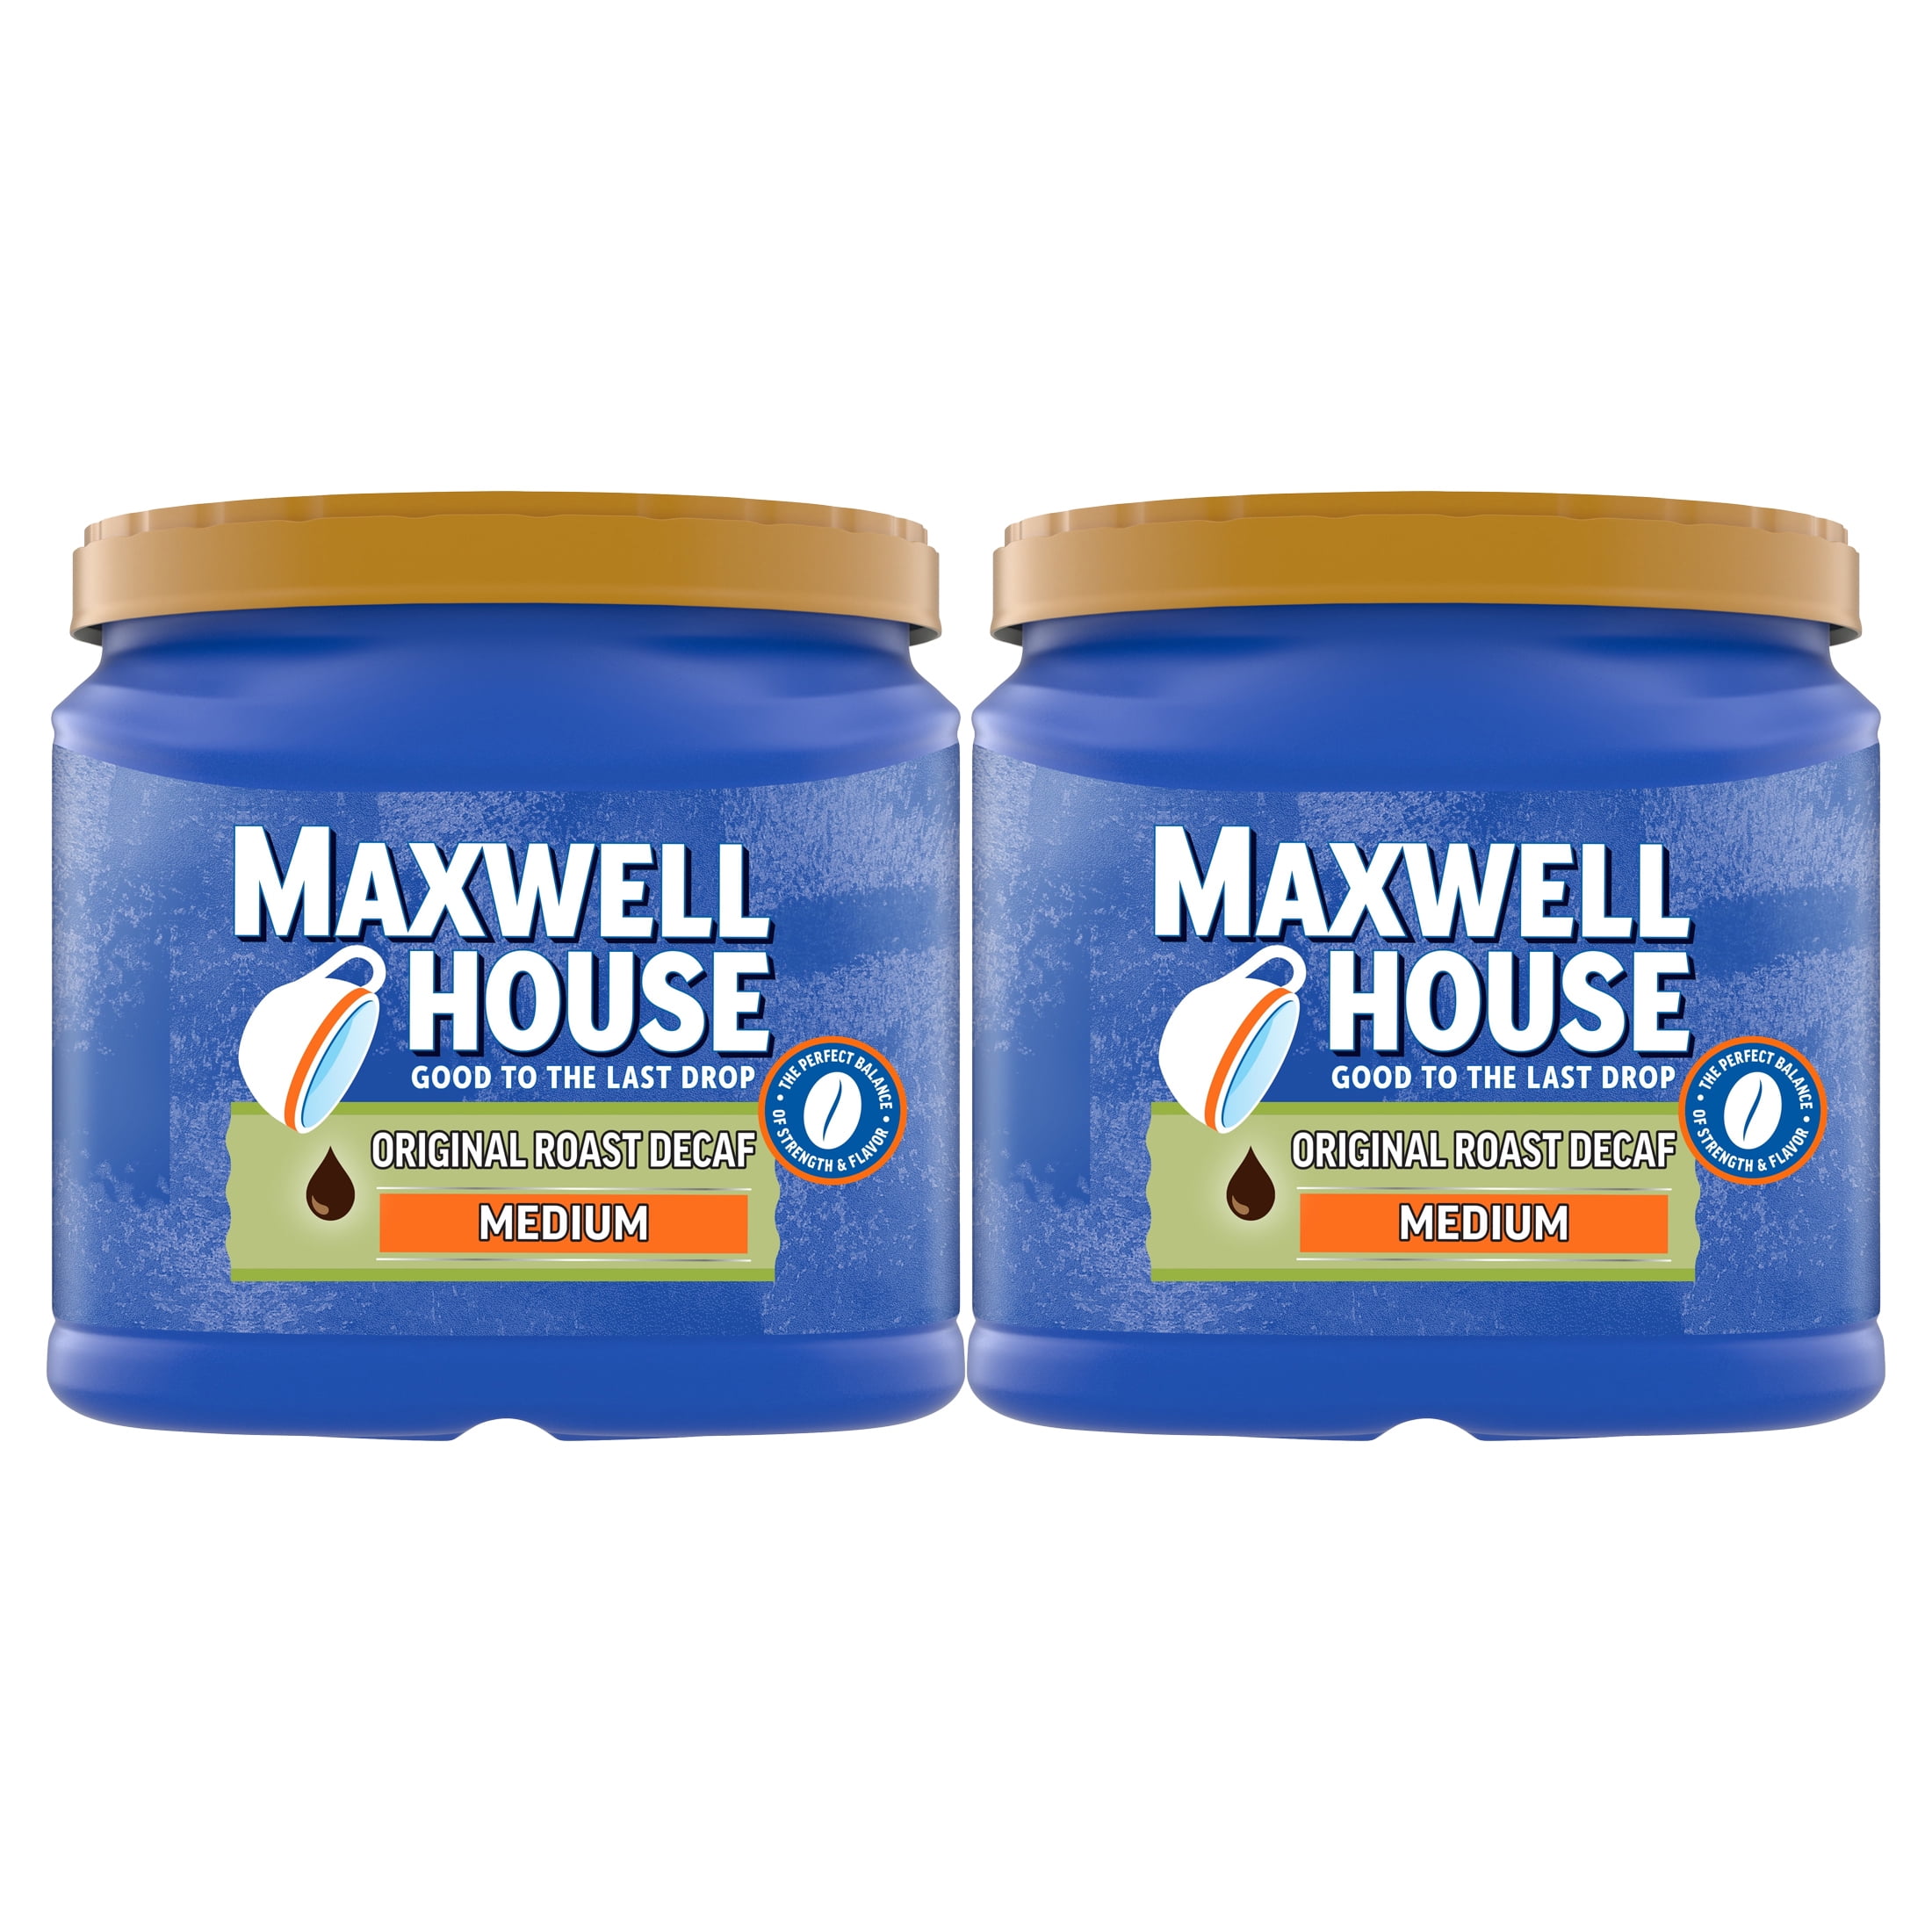 Maxwell House The Original Roast Medium Roast Ground Coffee, 11.5 oz  Canister